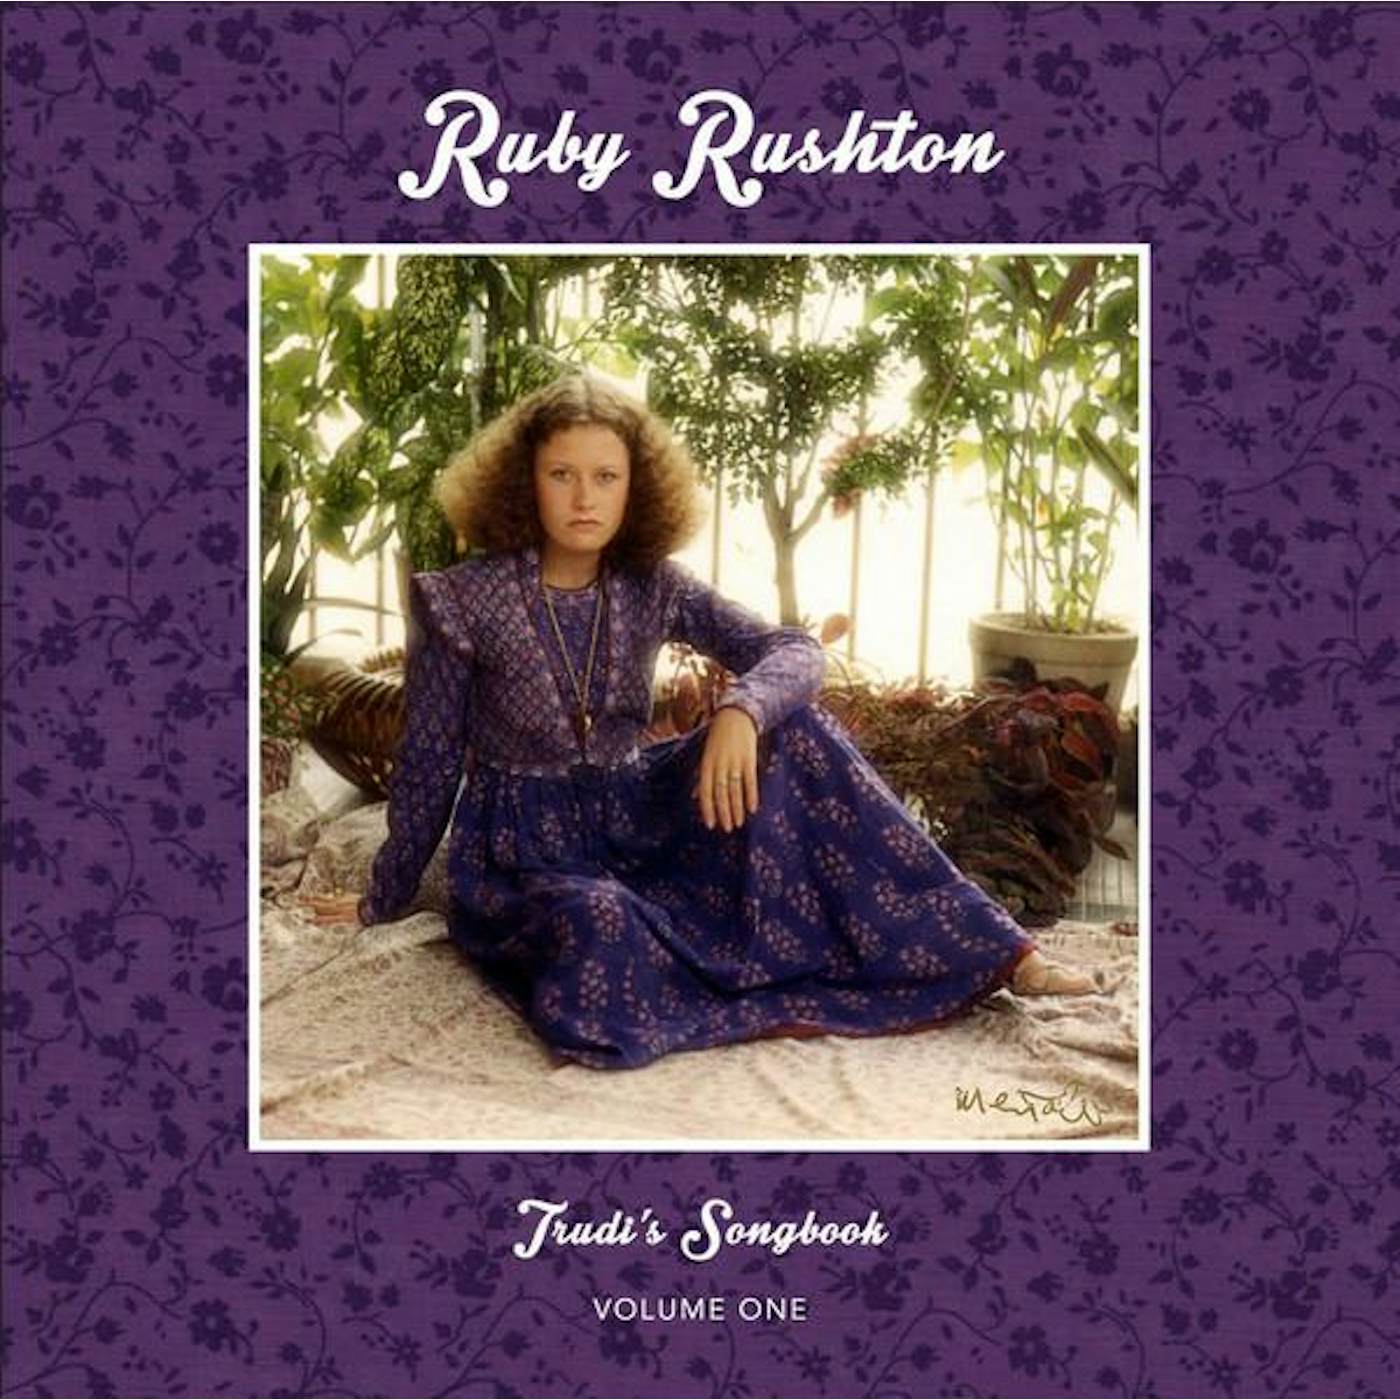 Ruby Rushton Trudi's Songbook: Volume One Vinyl Record